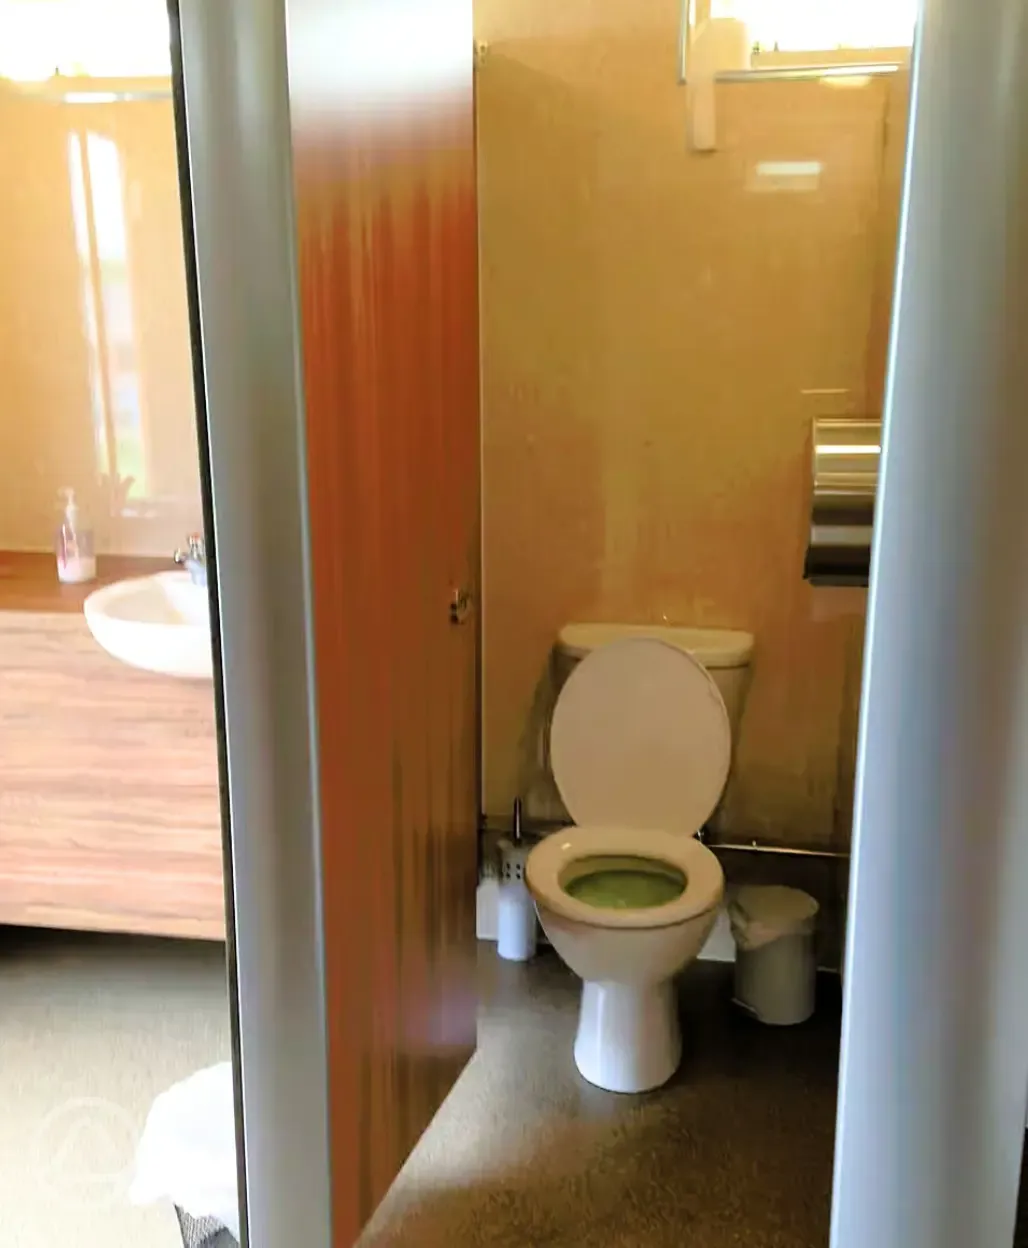 Communal toilets